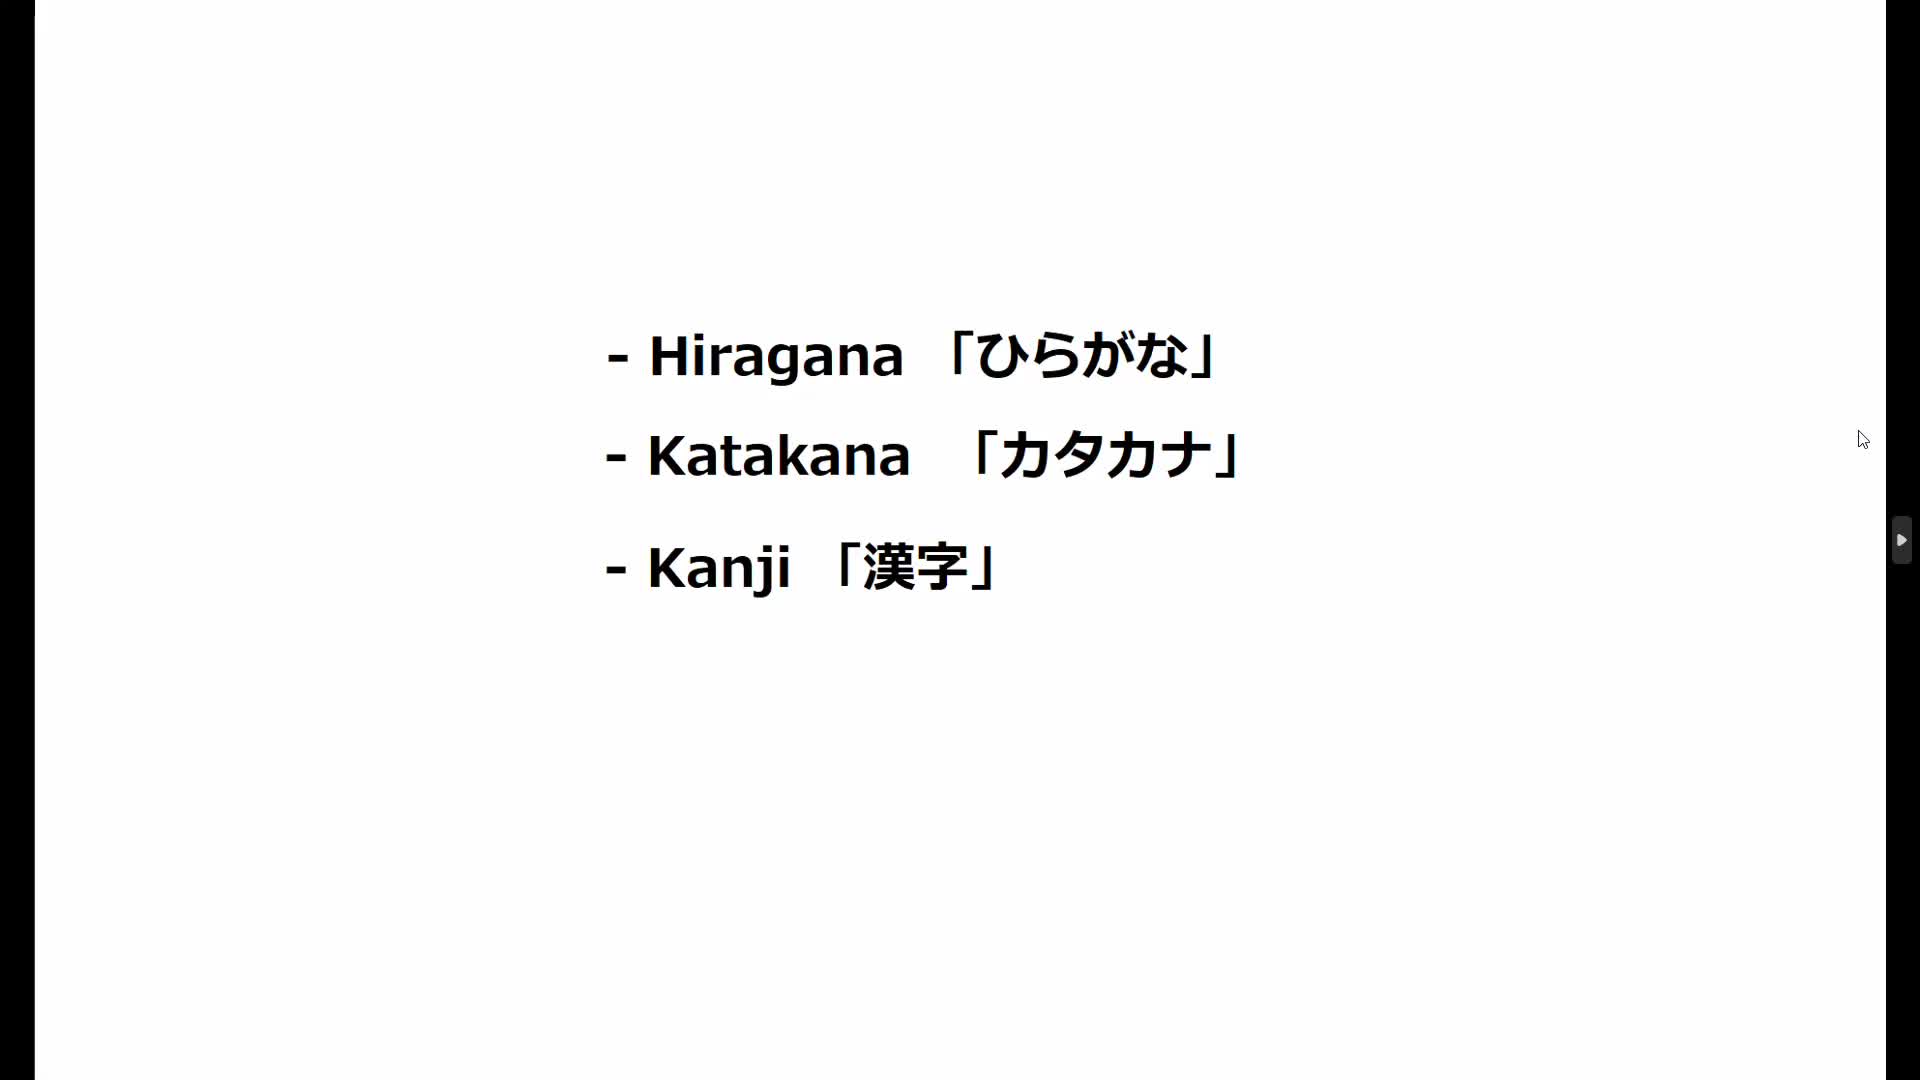 1. Hiragana ve Katakana 